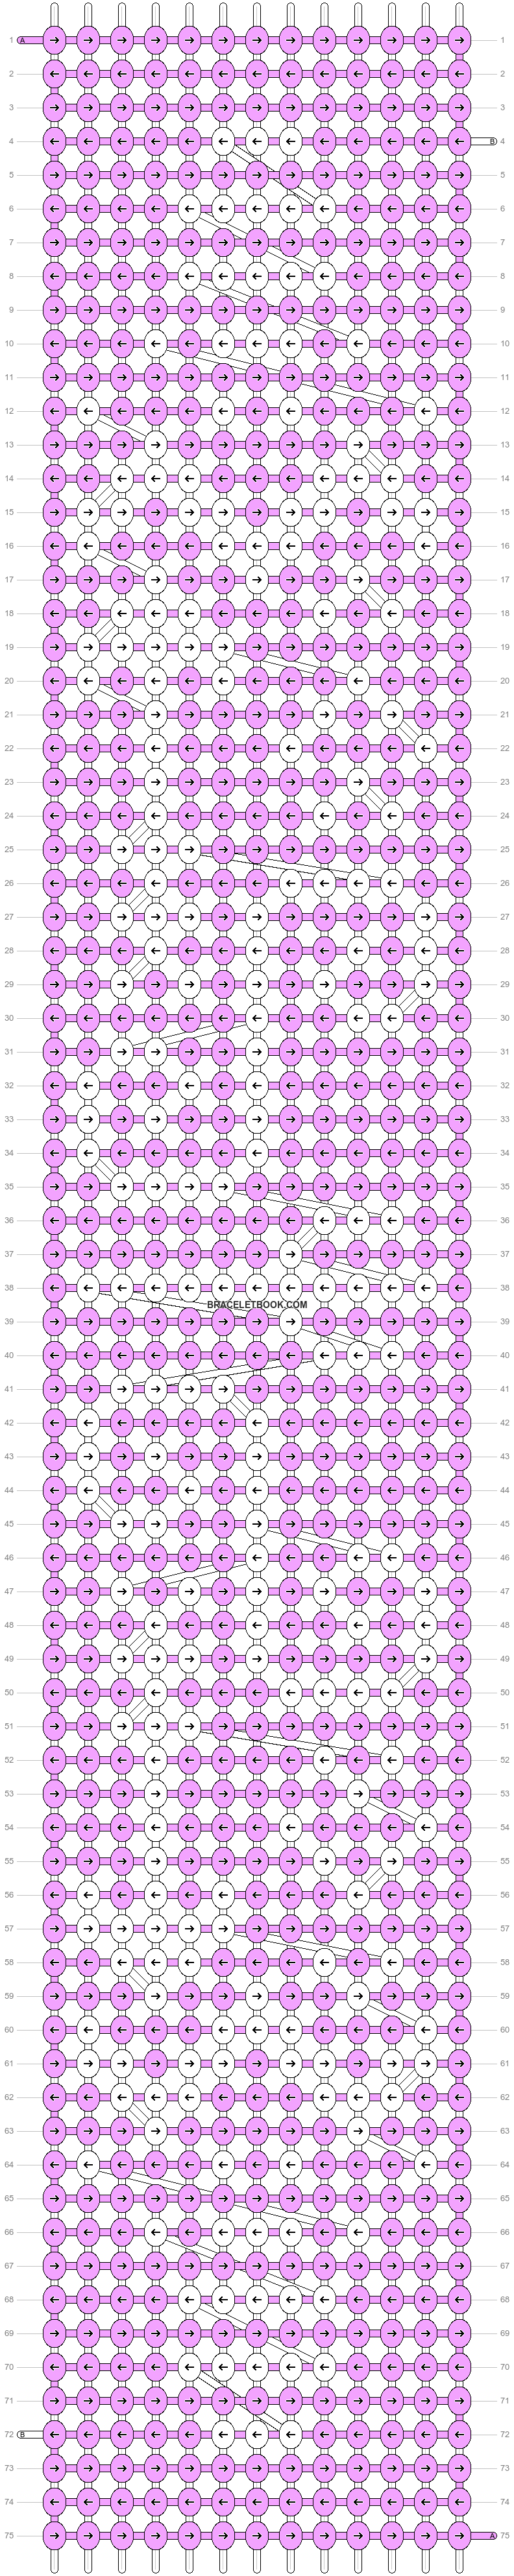 Alpha pattern #57355 variation #100112 pattern